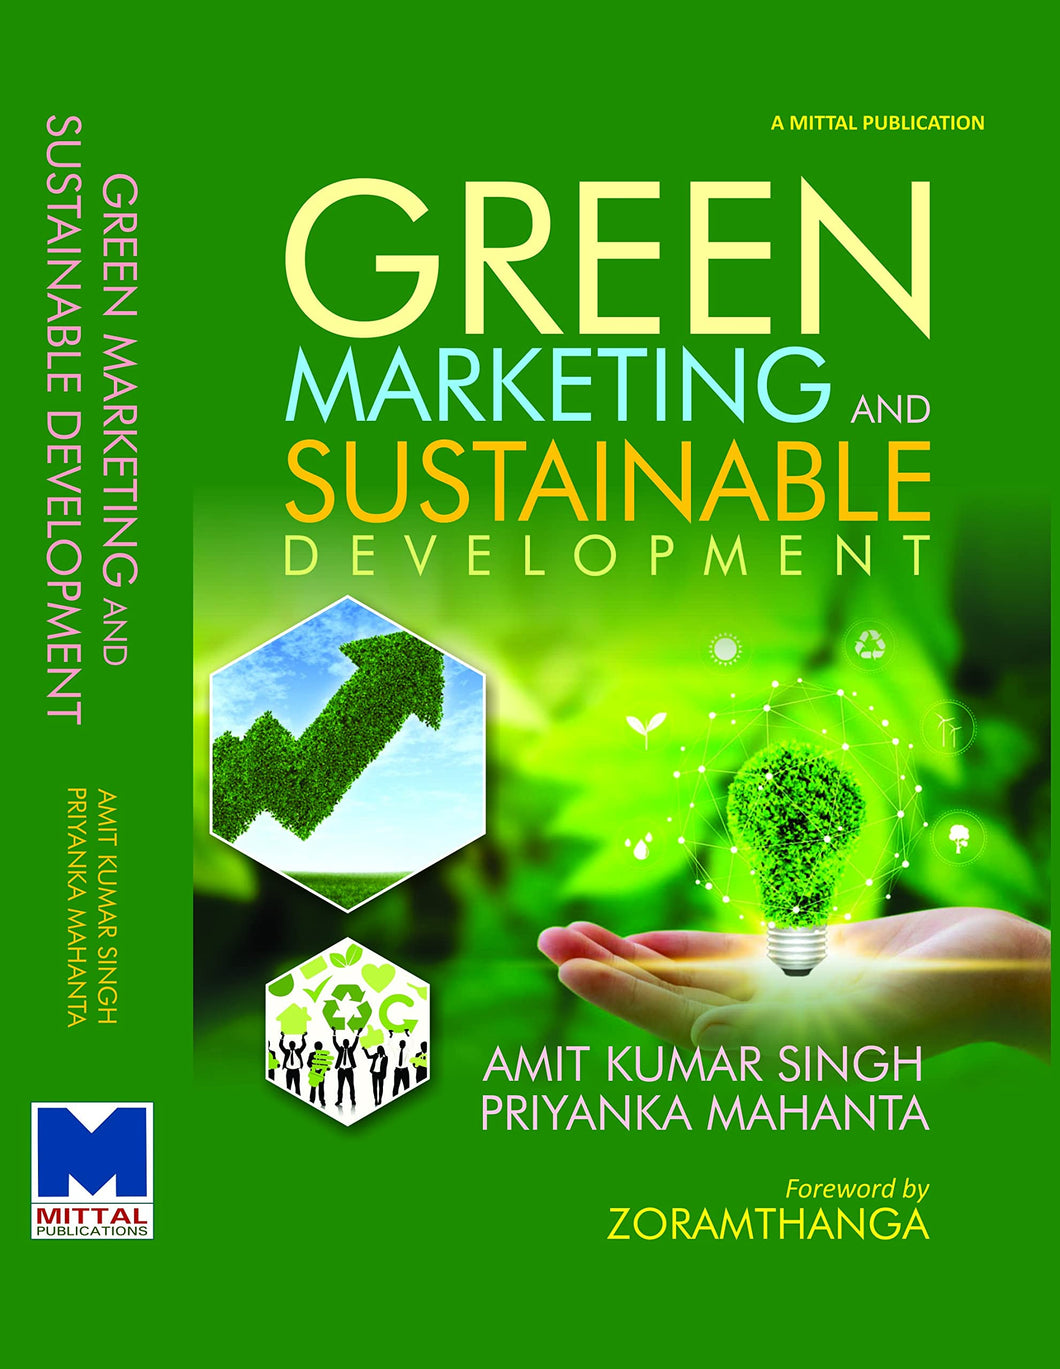 Green Marketing and Sustainable Development by Amit Kumar Singh, Priyanka Mahanta, Foreword by Zoramthanga